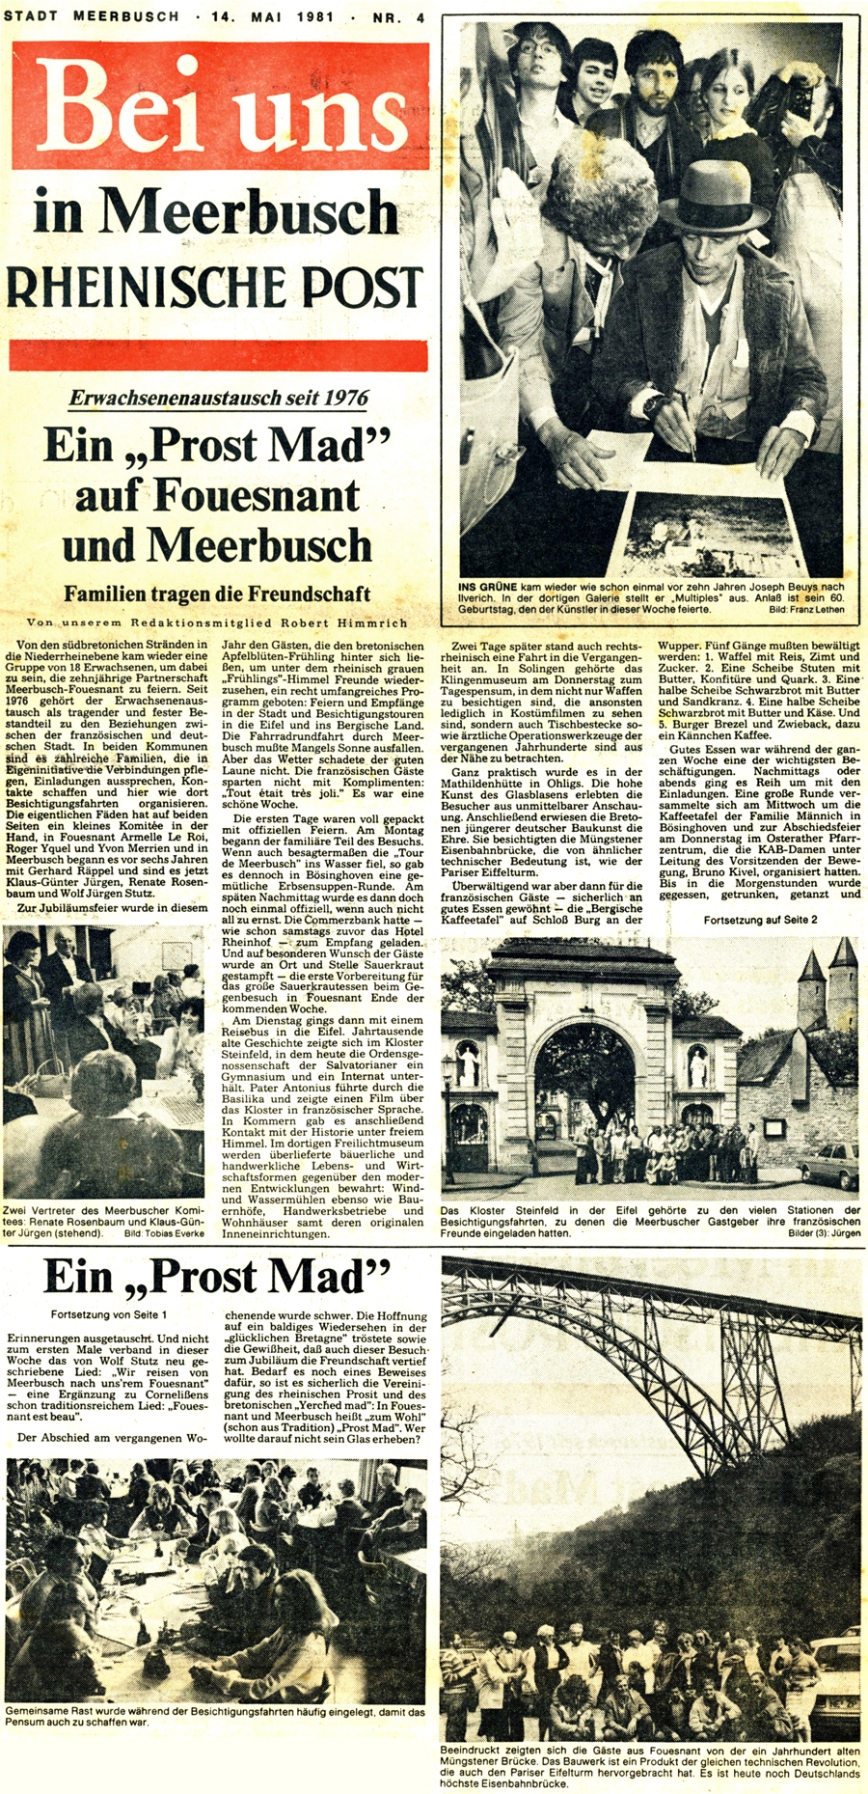 Bei uns in Meerbusch - Rheinische Post, 14 mai 1981